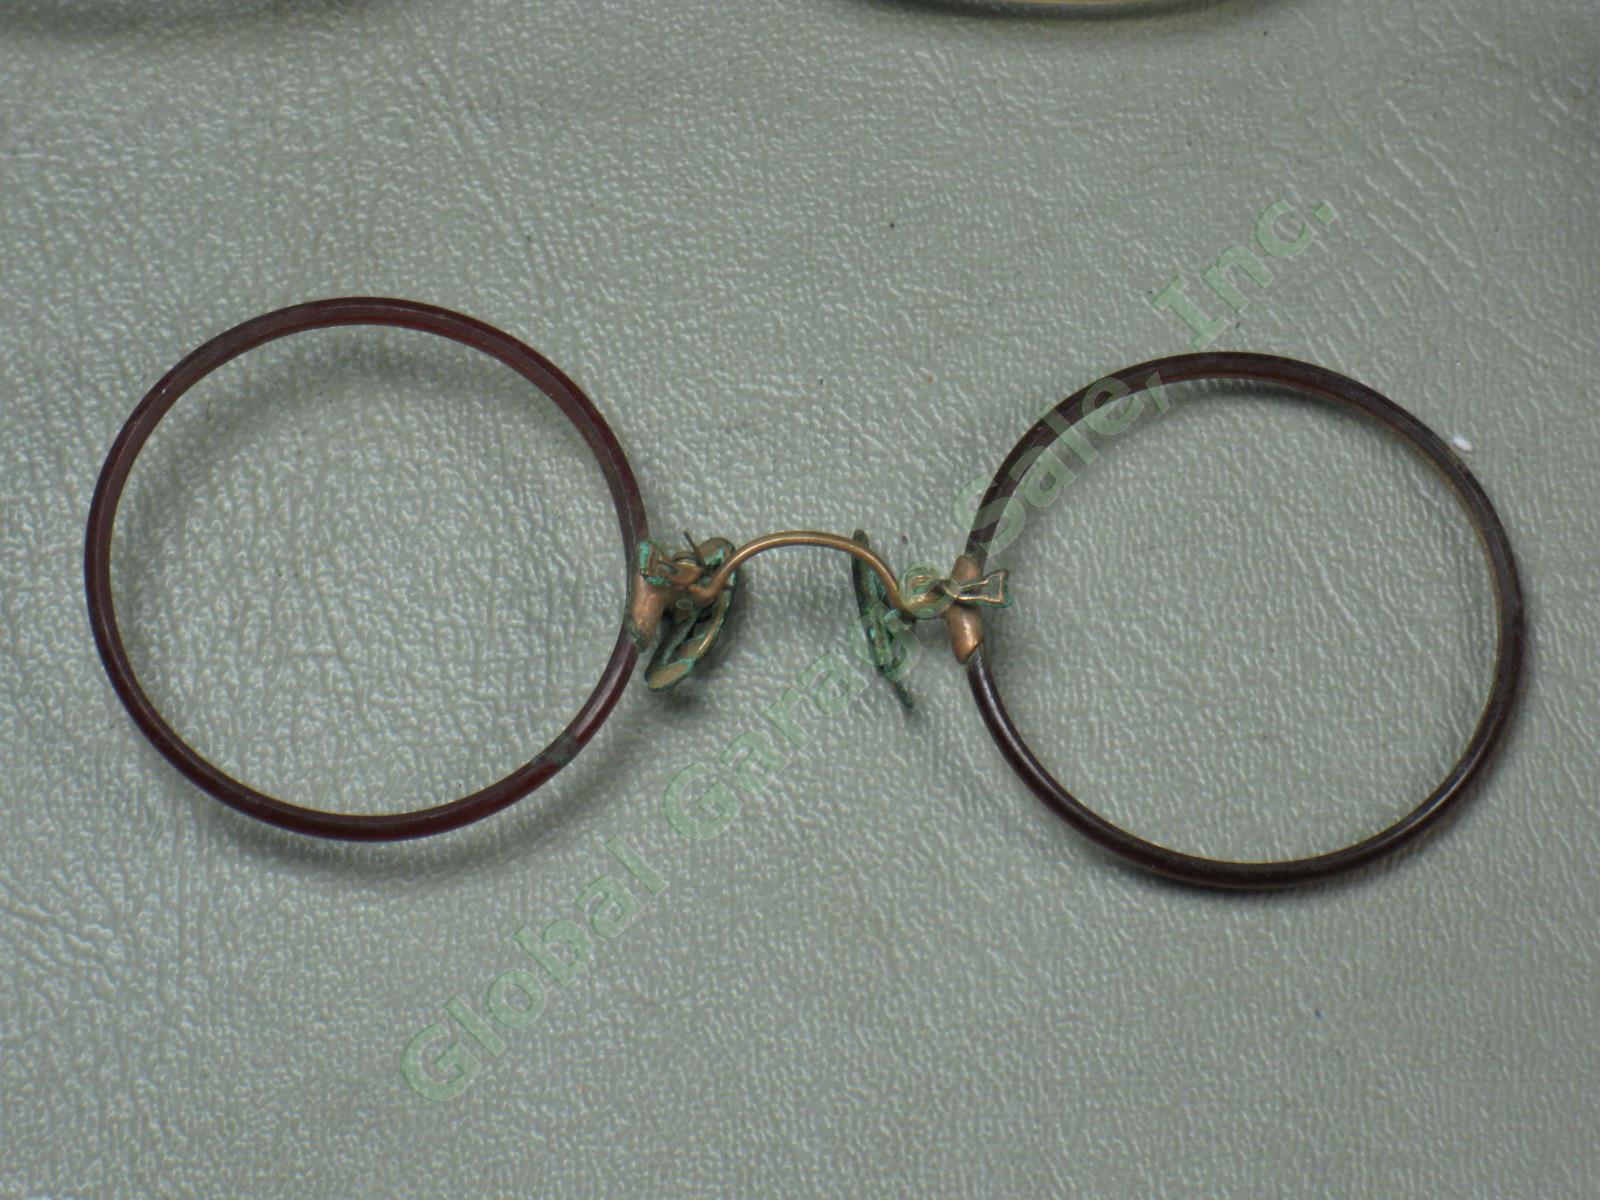 70 NEW NOS Plastic Eyeglass Glasses Frames Wholesale Lot Ralph Lauren Zeiss +NR! 10